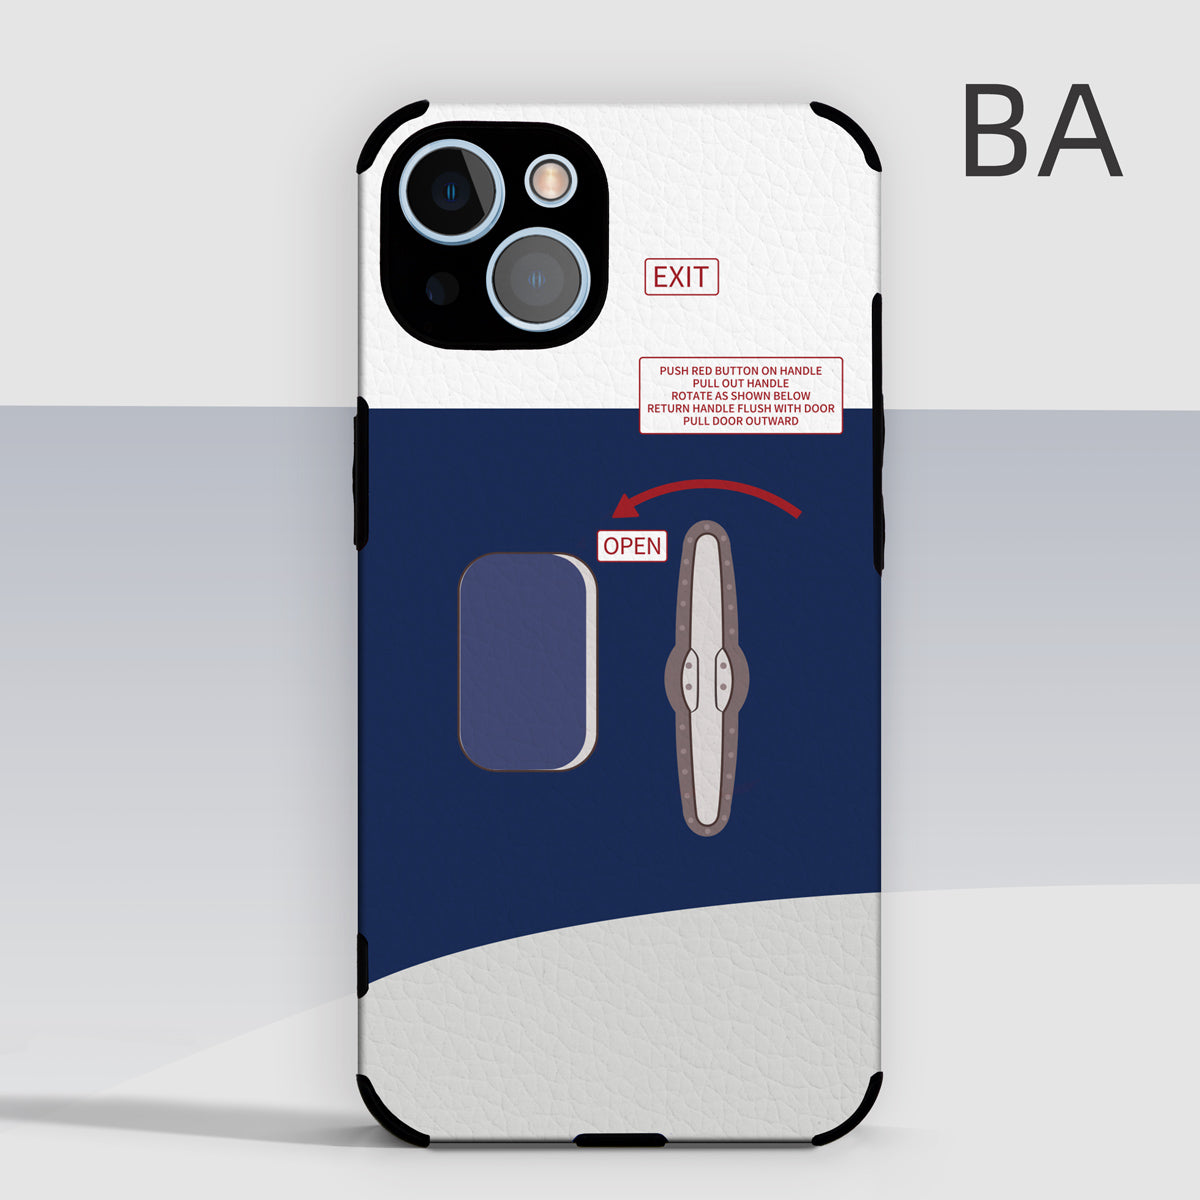 British Airways BA Boeing 747 Phone Case aviation gift pilot iPhone Android Apple Samsung Huawei